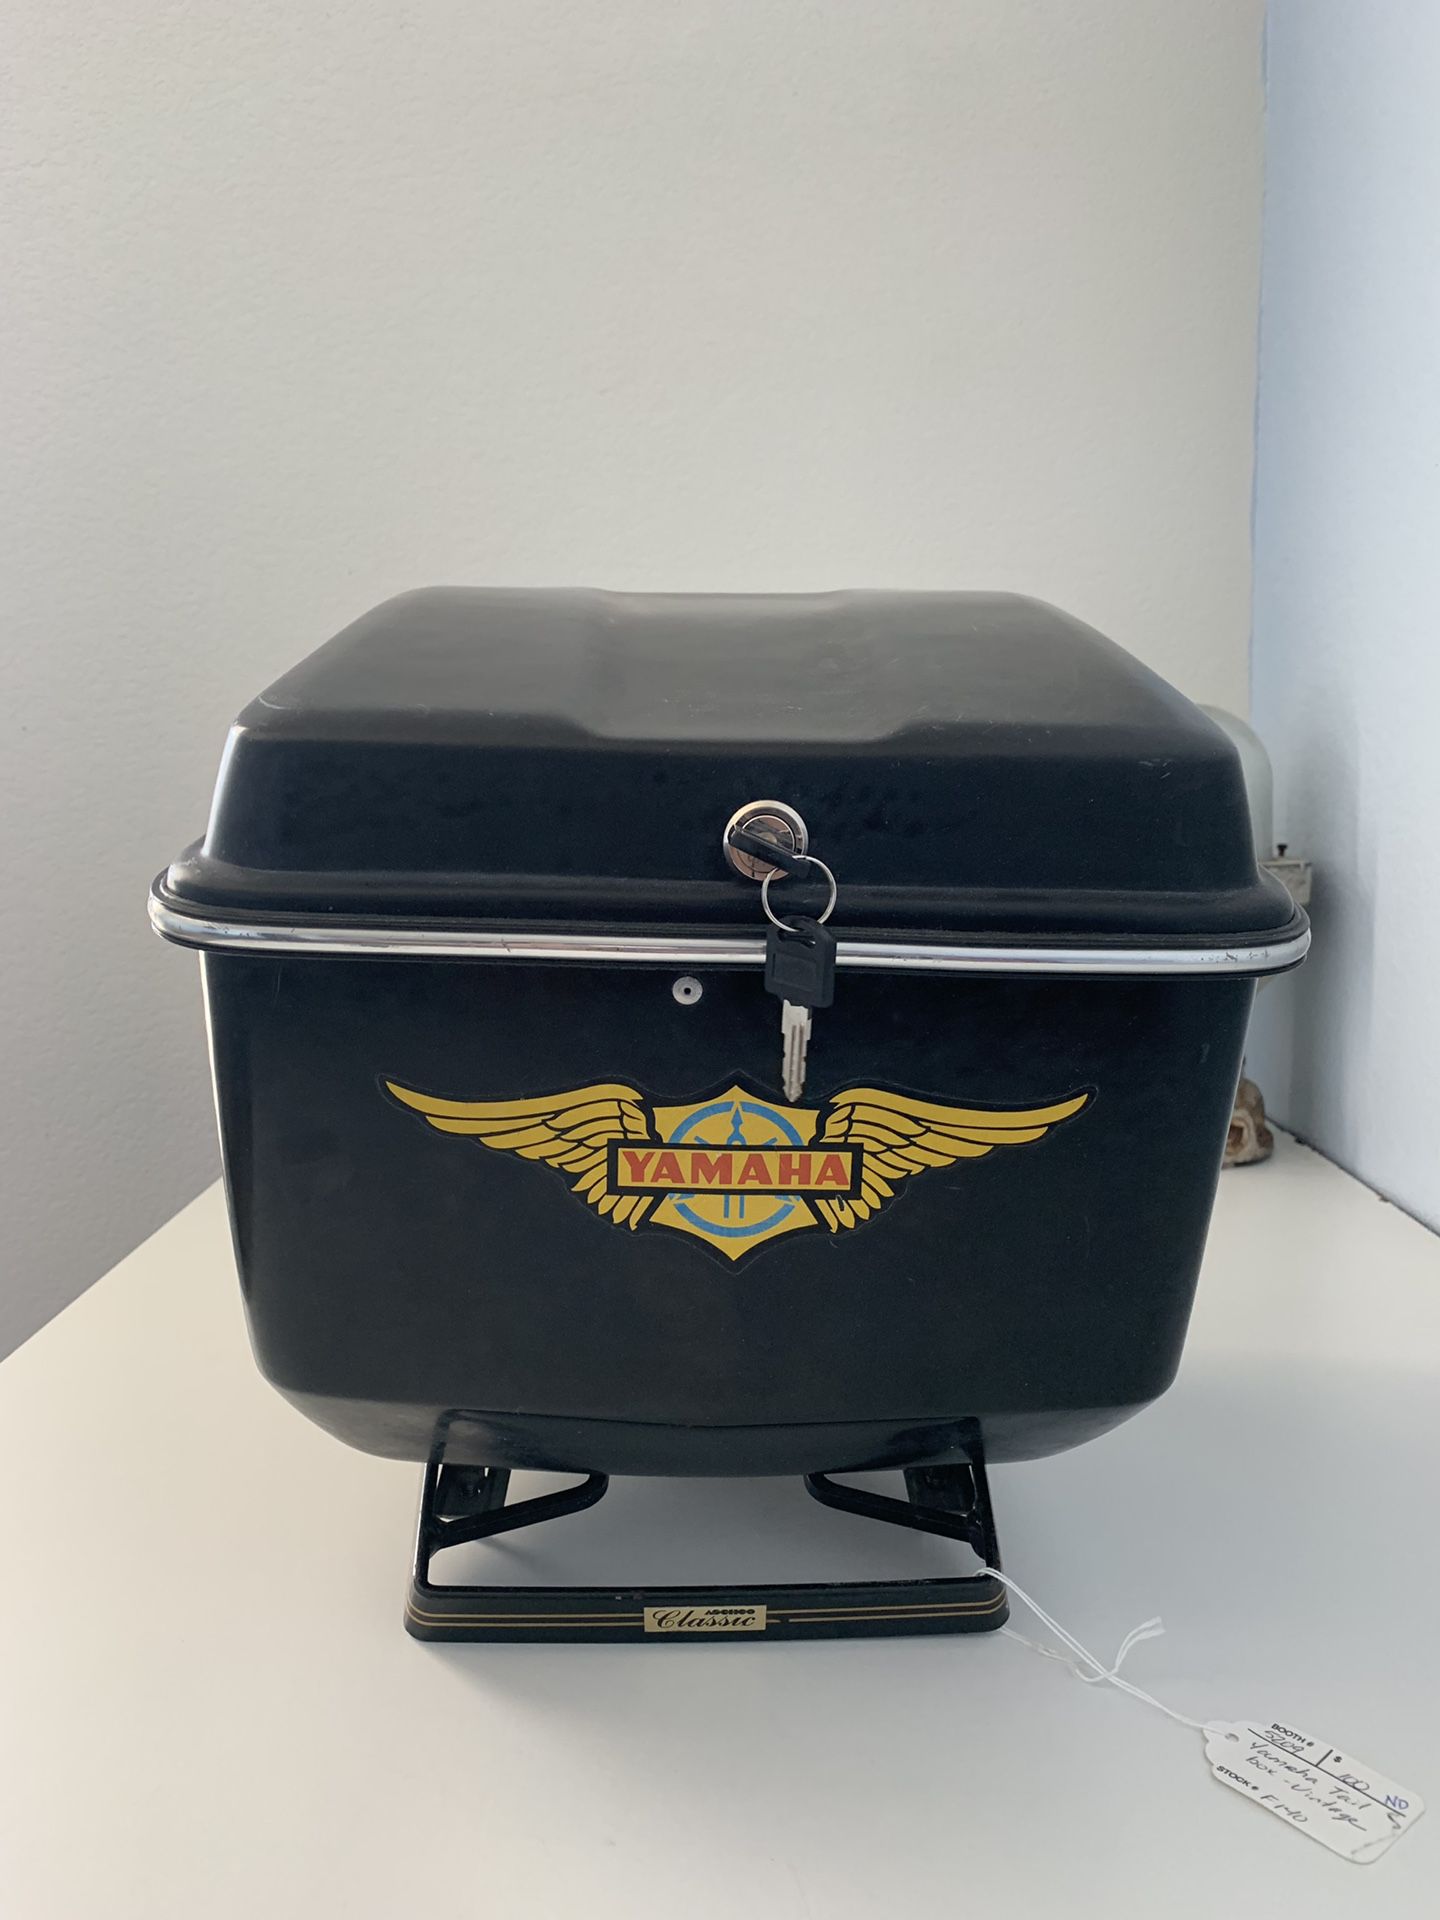 Vintage Yamaha motorcycle trail box